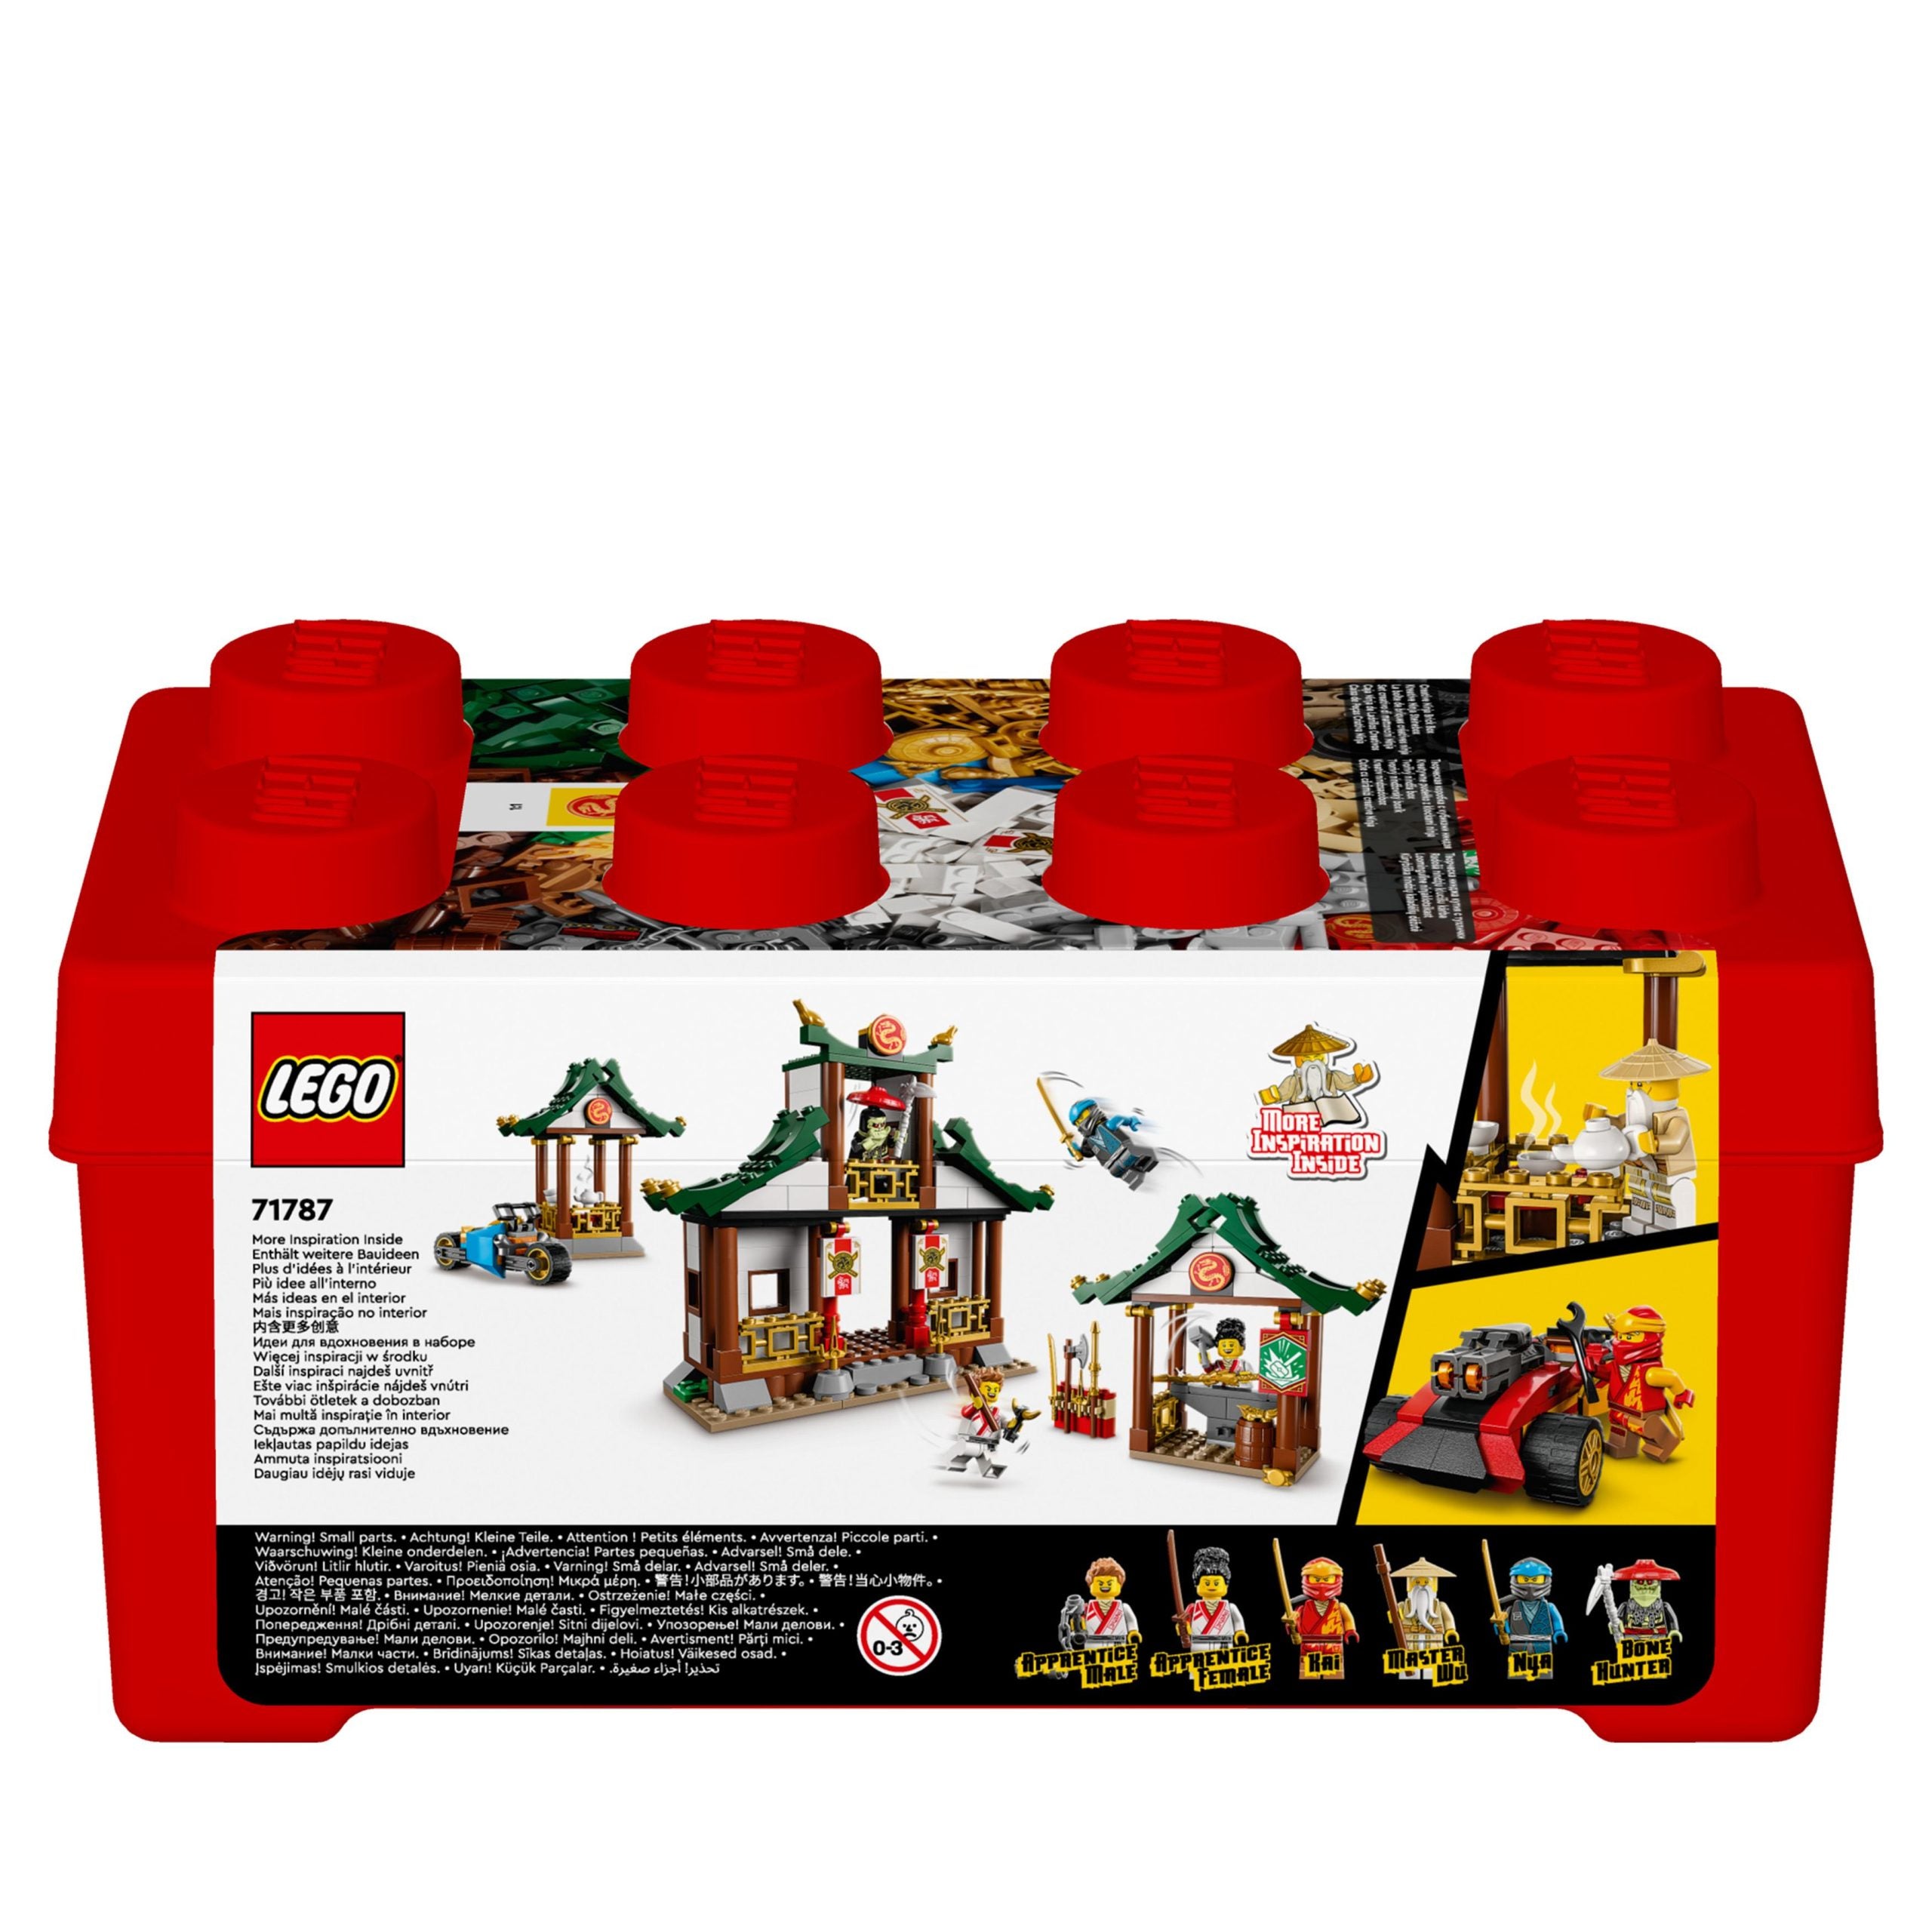 71787 LEGO Ninjago - Set creativo di mattoncini Ninjago -